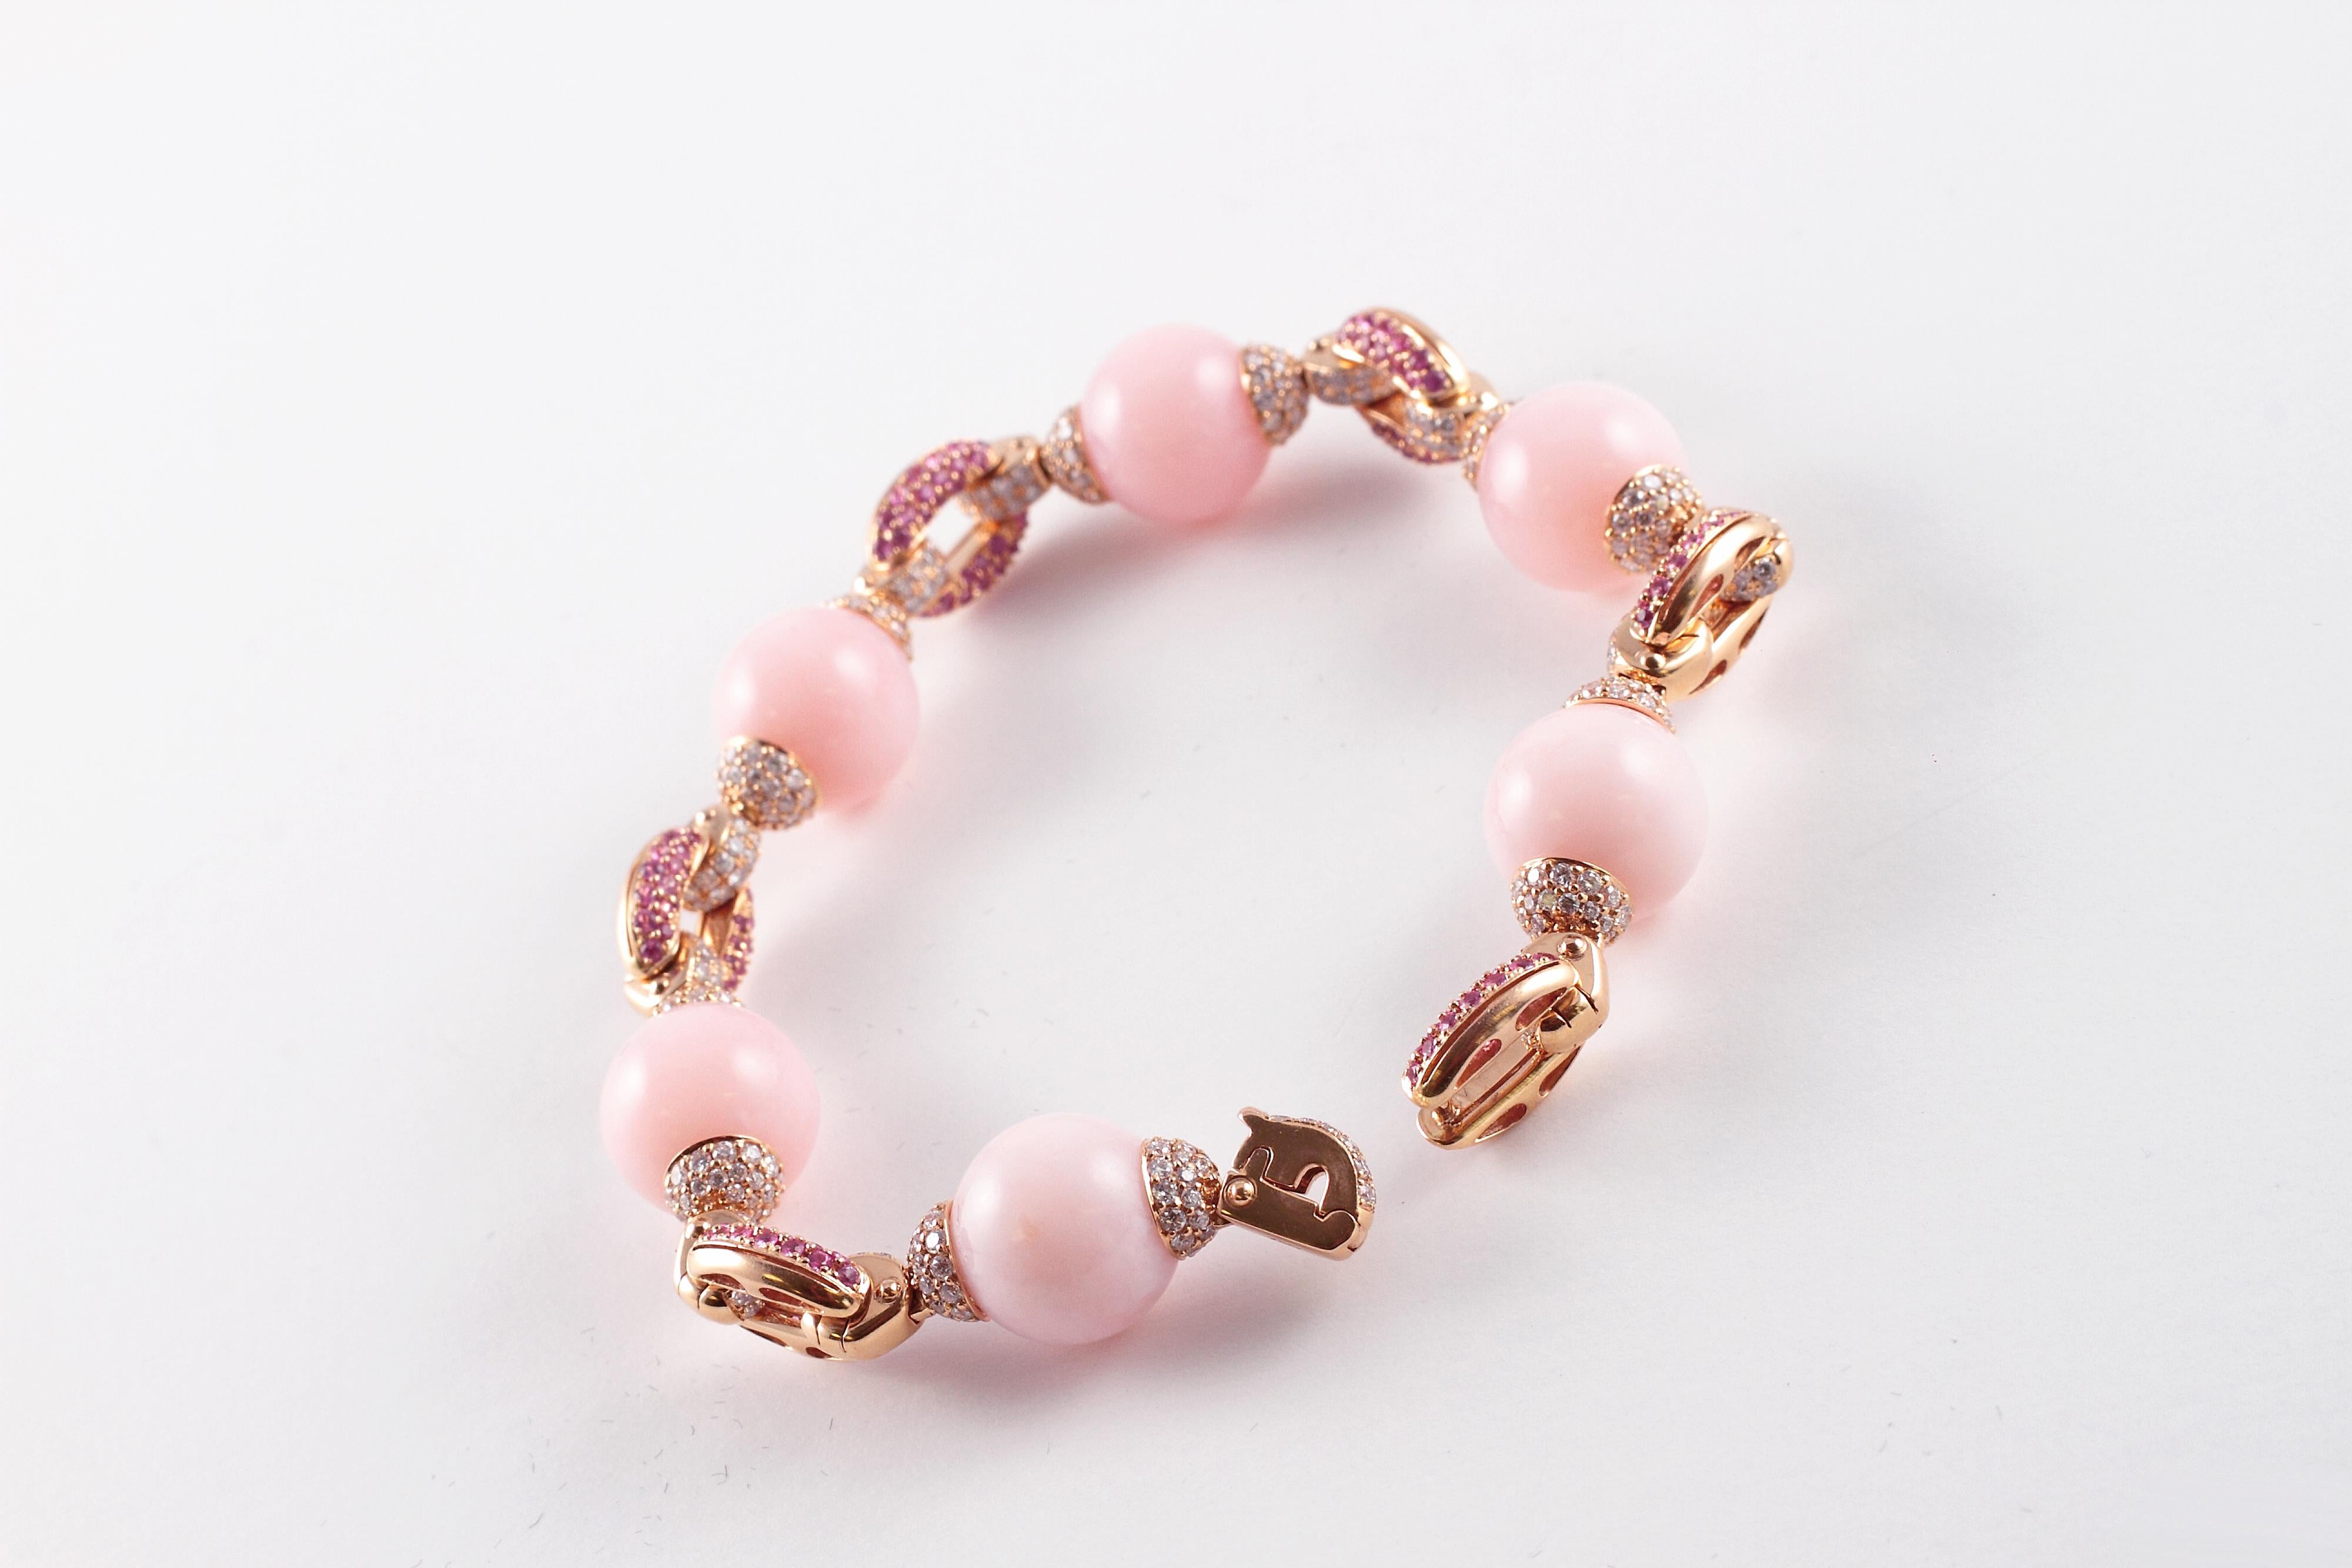 58.52 Carat Pink Opal 2.14 Carat Pink Sapphire 3.55 Carats Diamond Bracelet For Sale 2